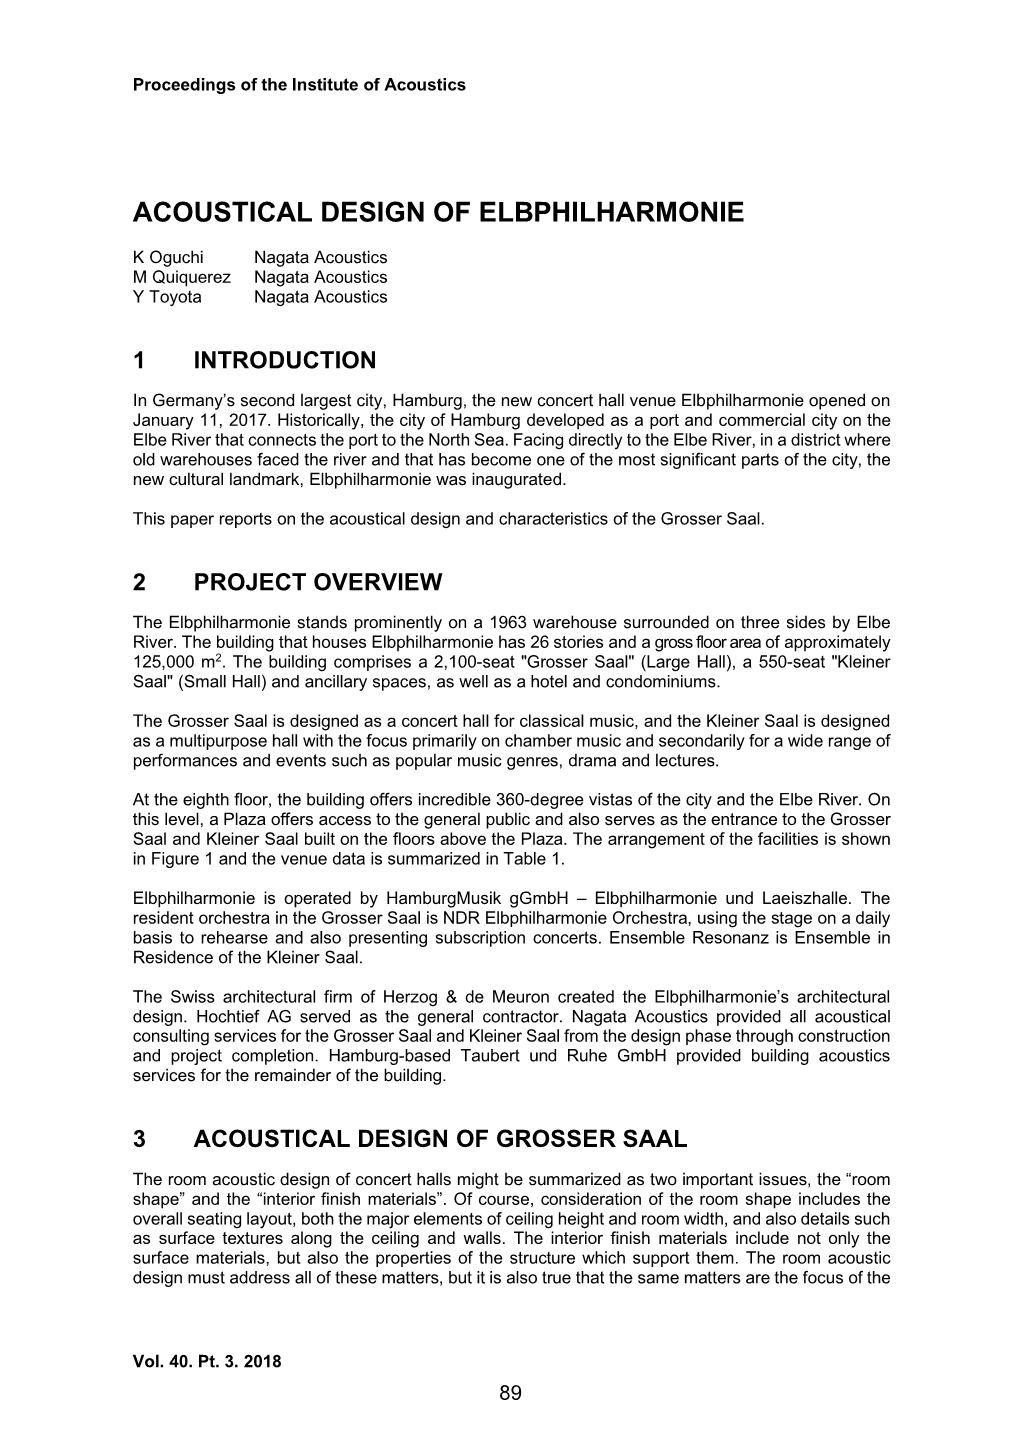 Acoustical Design of Elbphilharmonie